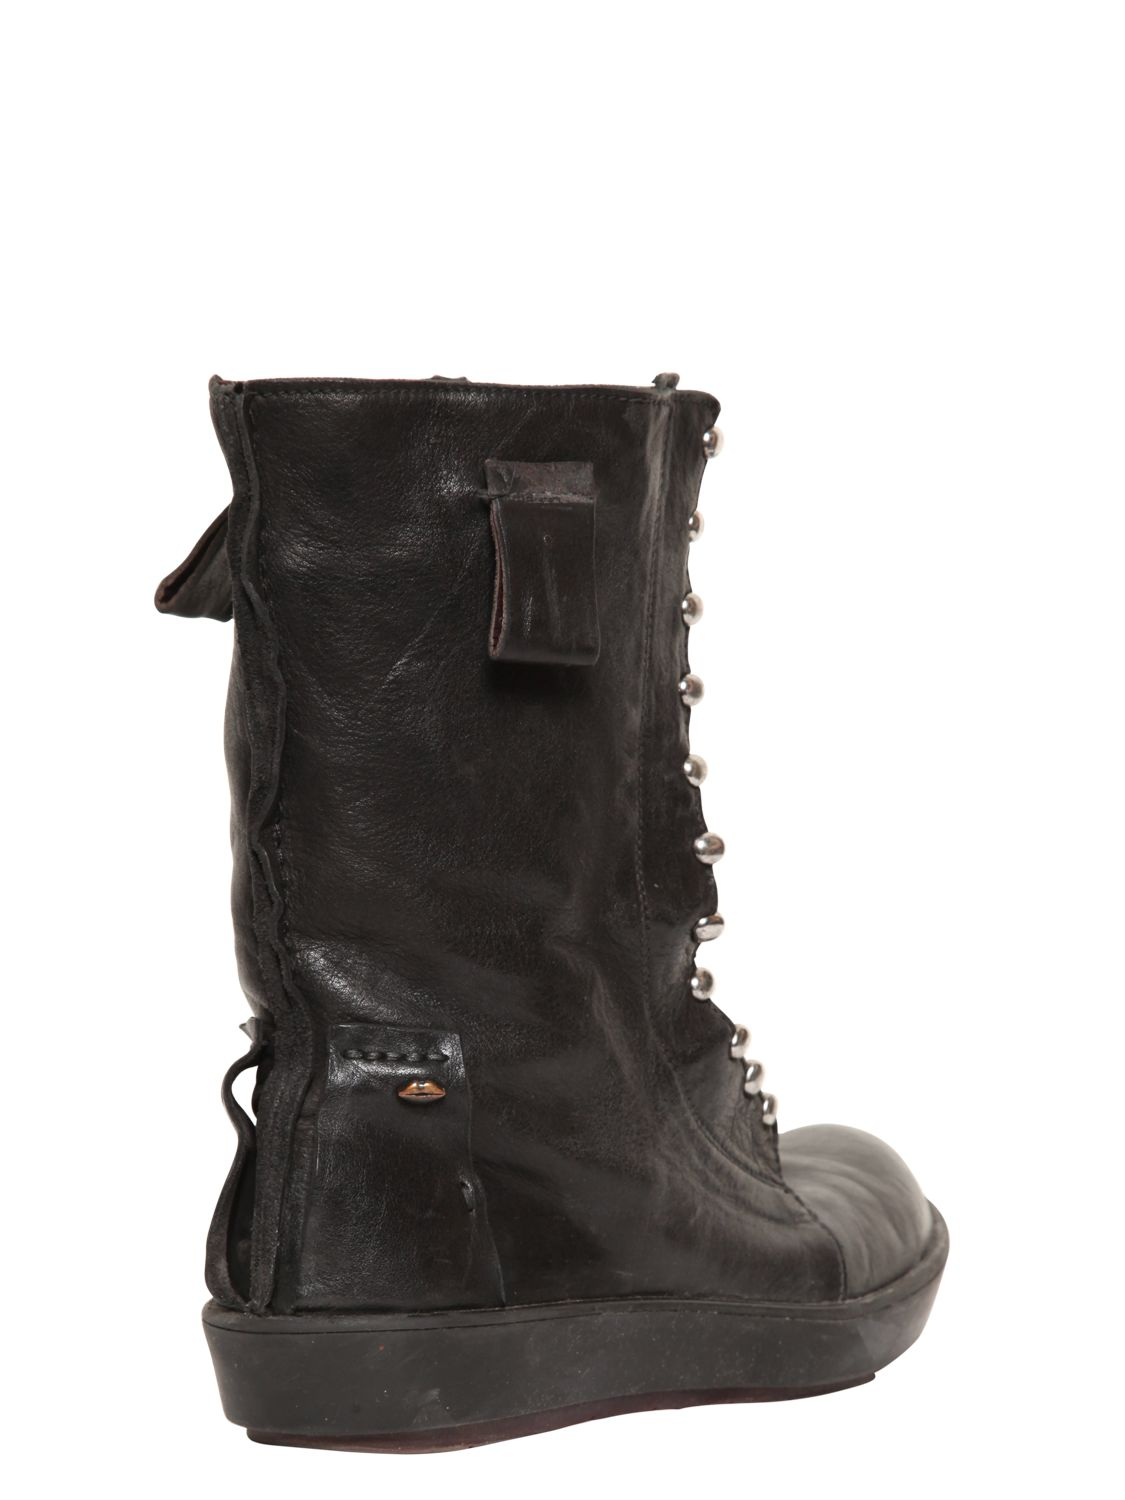 Vintage Black Leather Boots 55